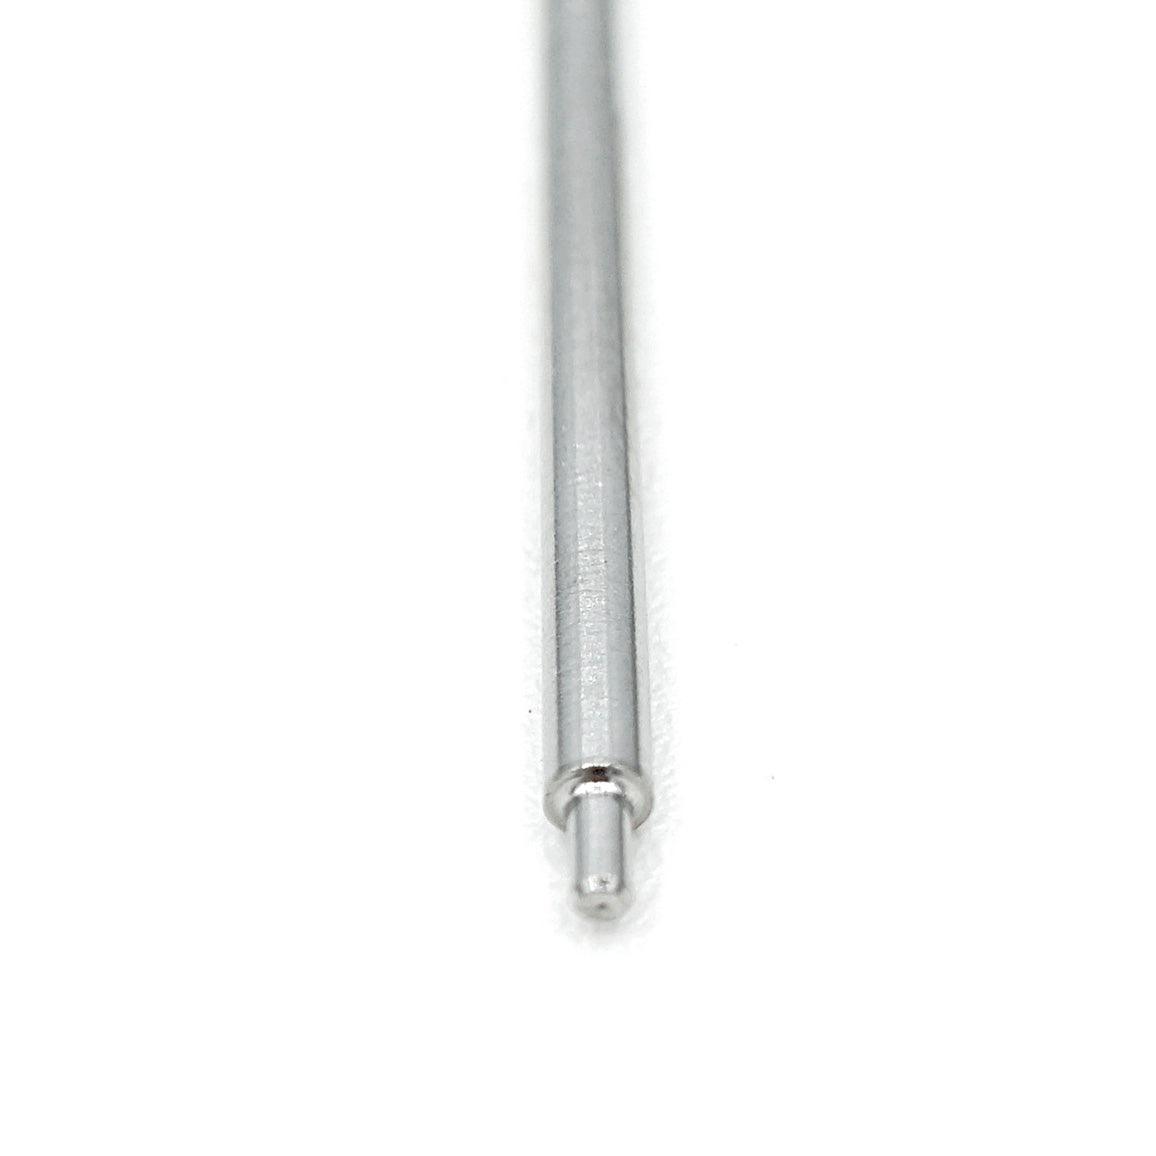 Stiletto Piercing Needles - 12G - Piercing Needles - FYT Tattoo Supplies New York